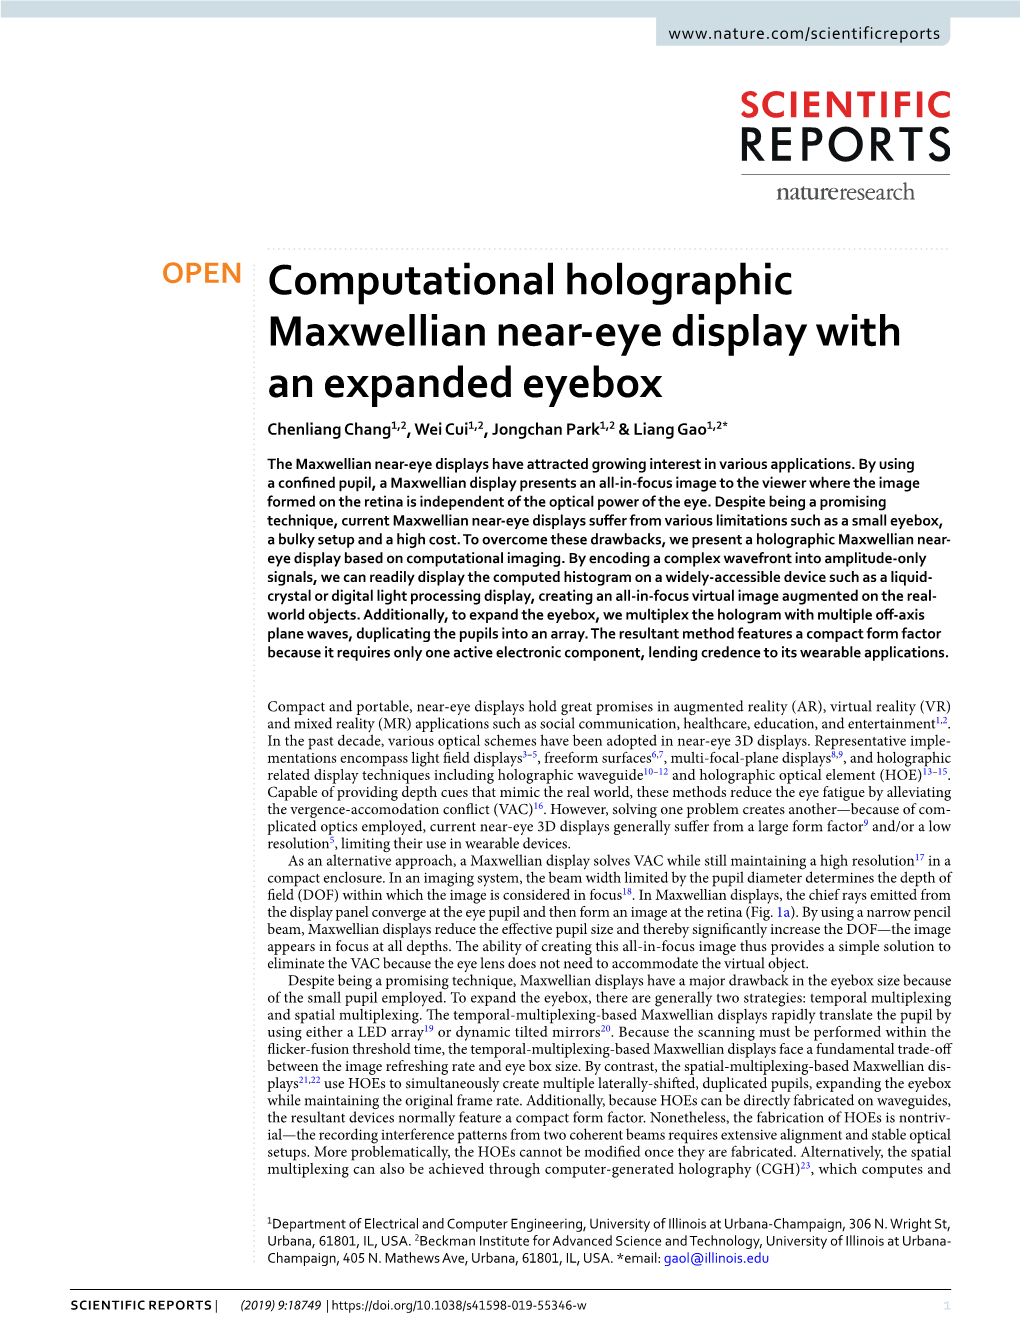 Computational Holographic Maxwellian Near-Eye Display with an Expanded Eyebox Chenliang Chang1,2, Wei Cui1,2, Jongchan Park1,2 & Liang Gao1,2*